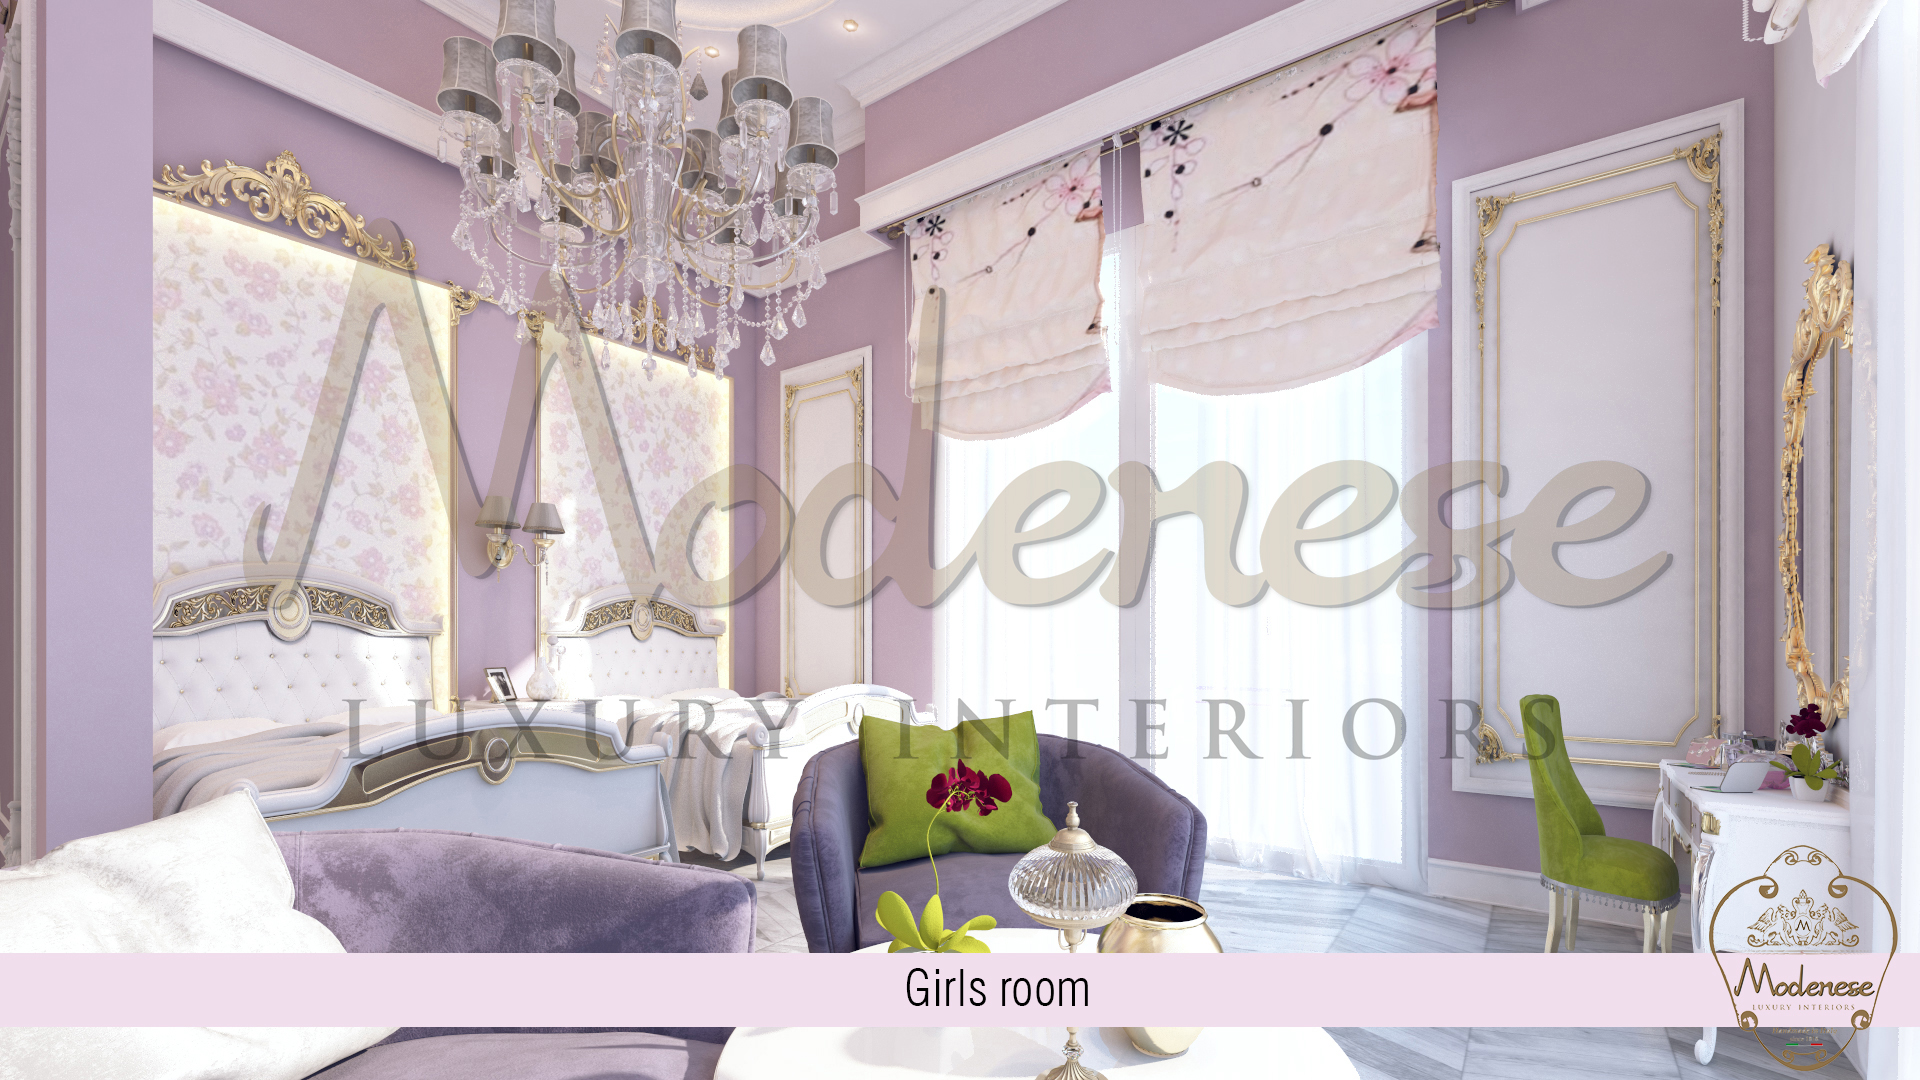 Decorating Girls Bedroom For Villa in London, United Kingdom